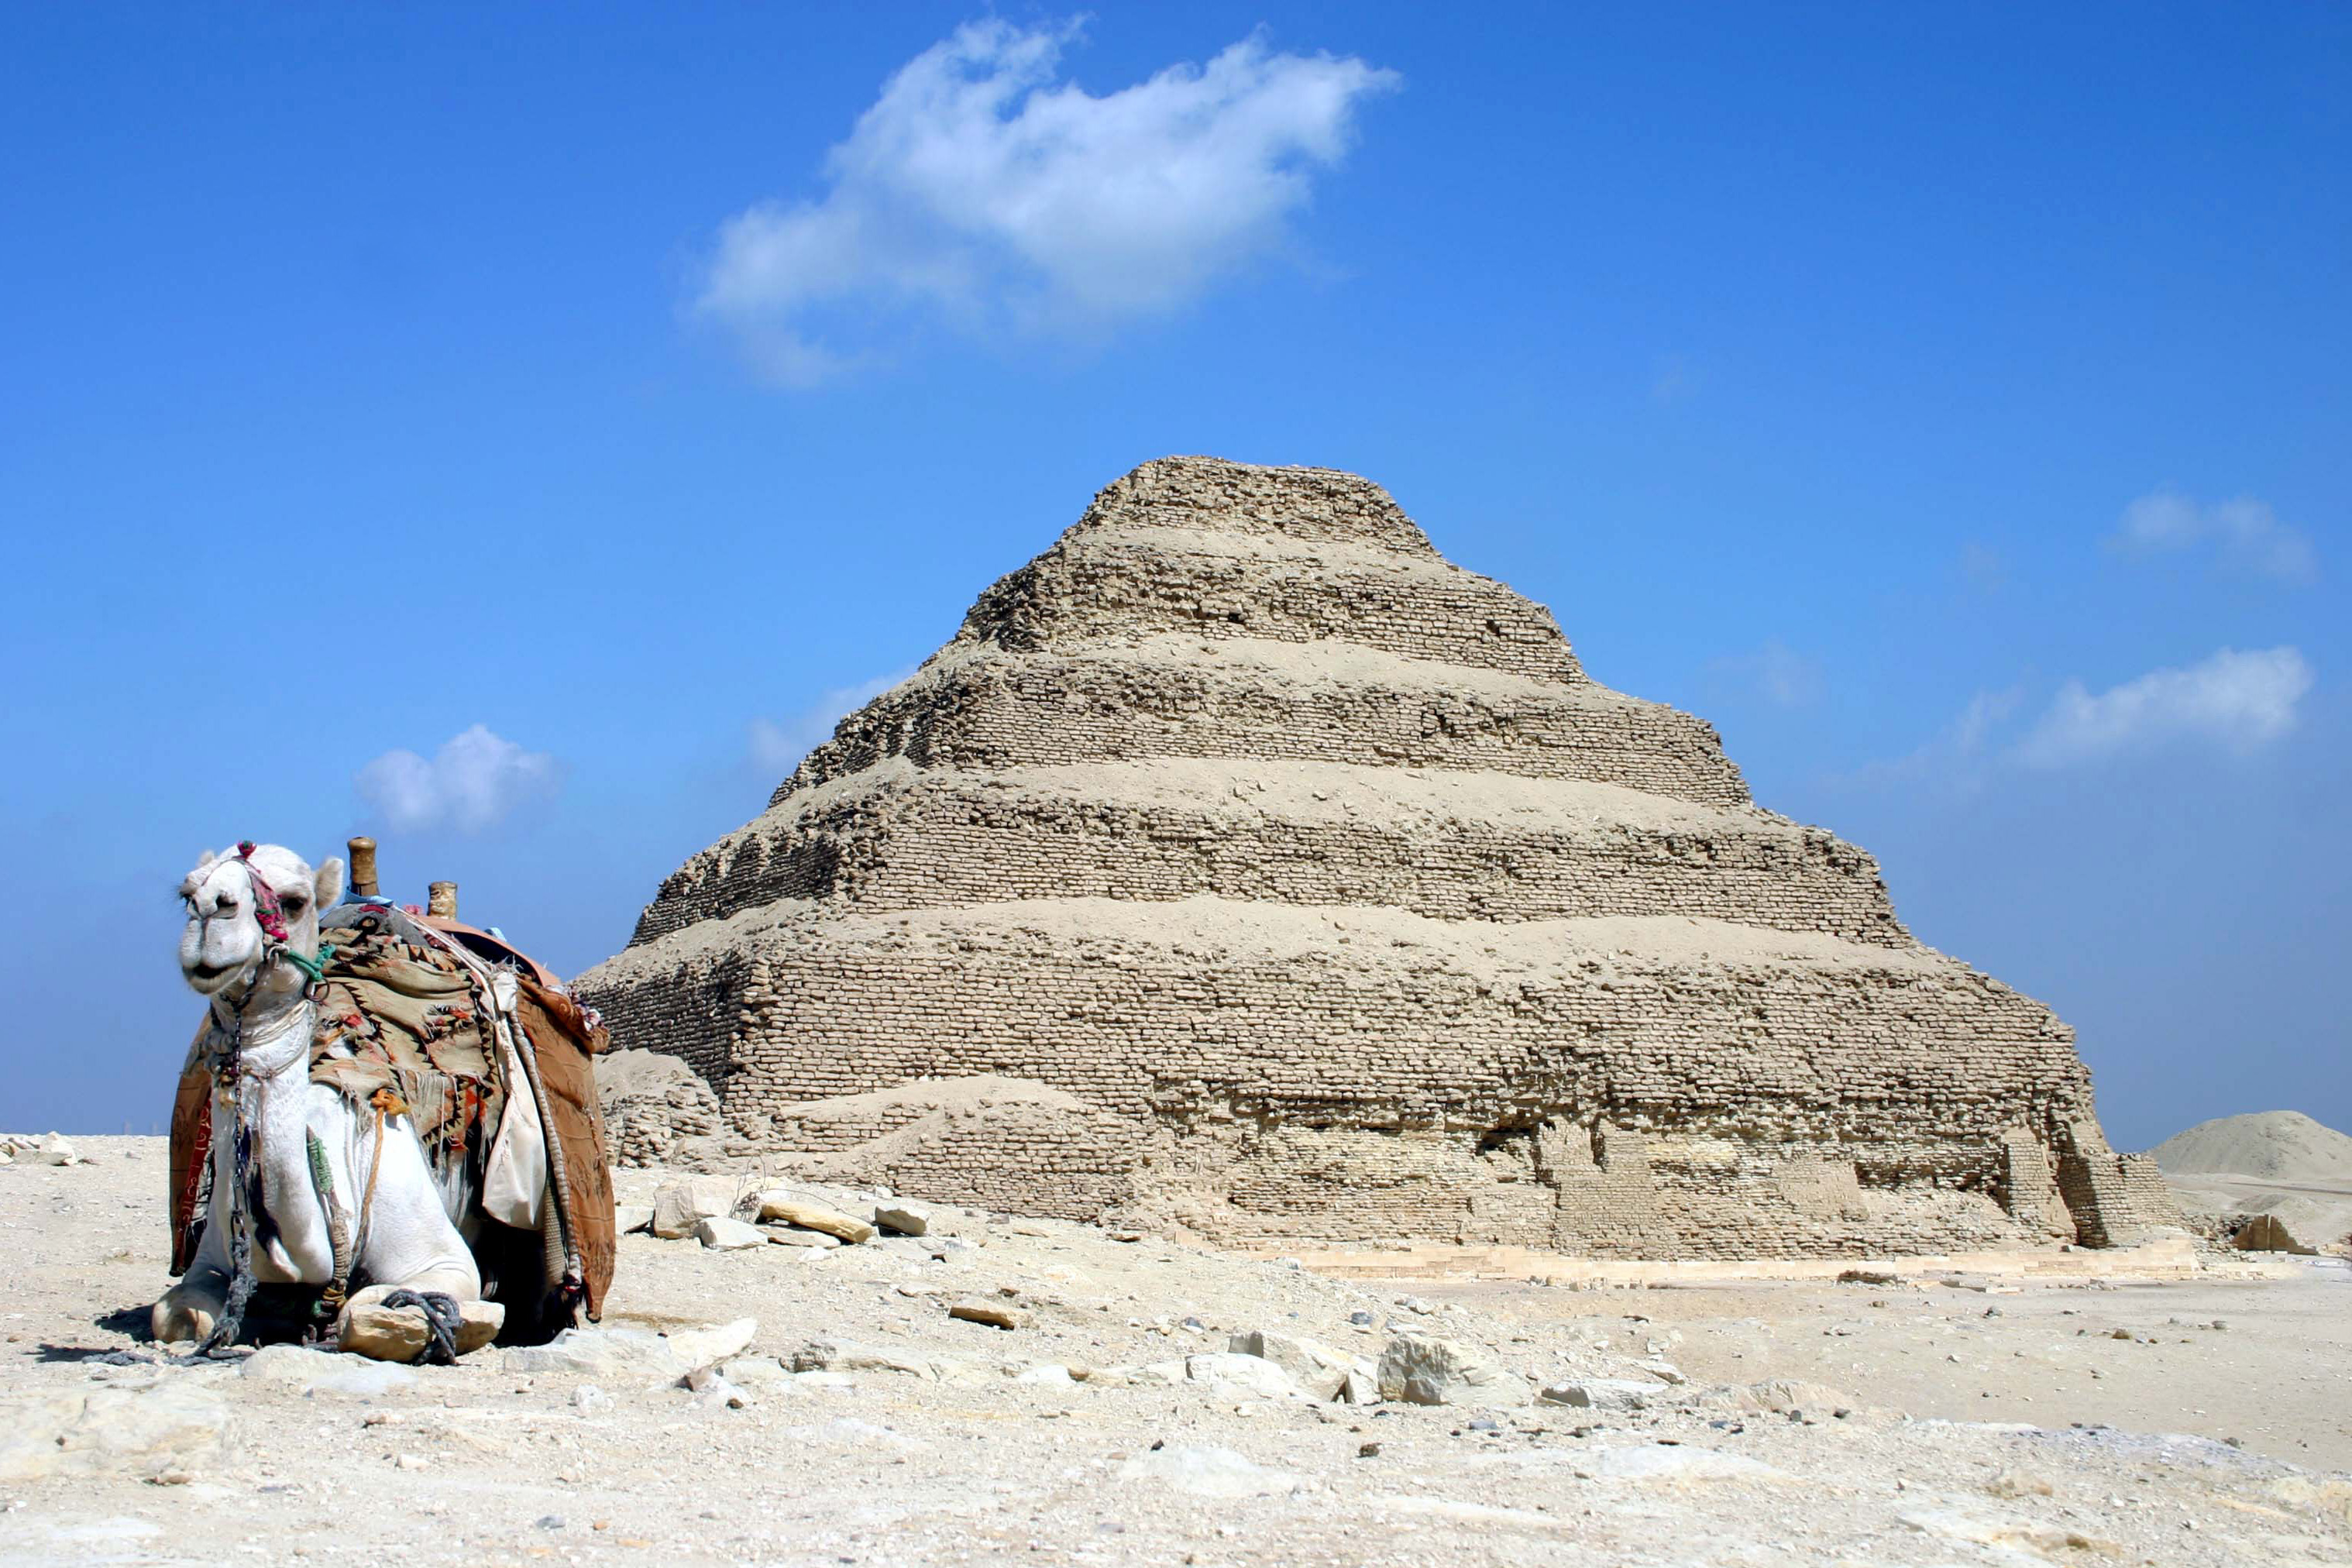 Saqqara pyramid ver 2